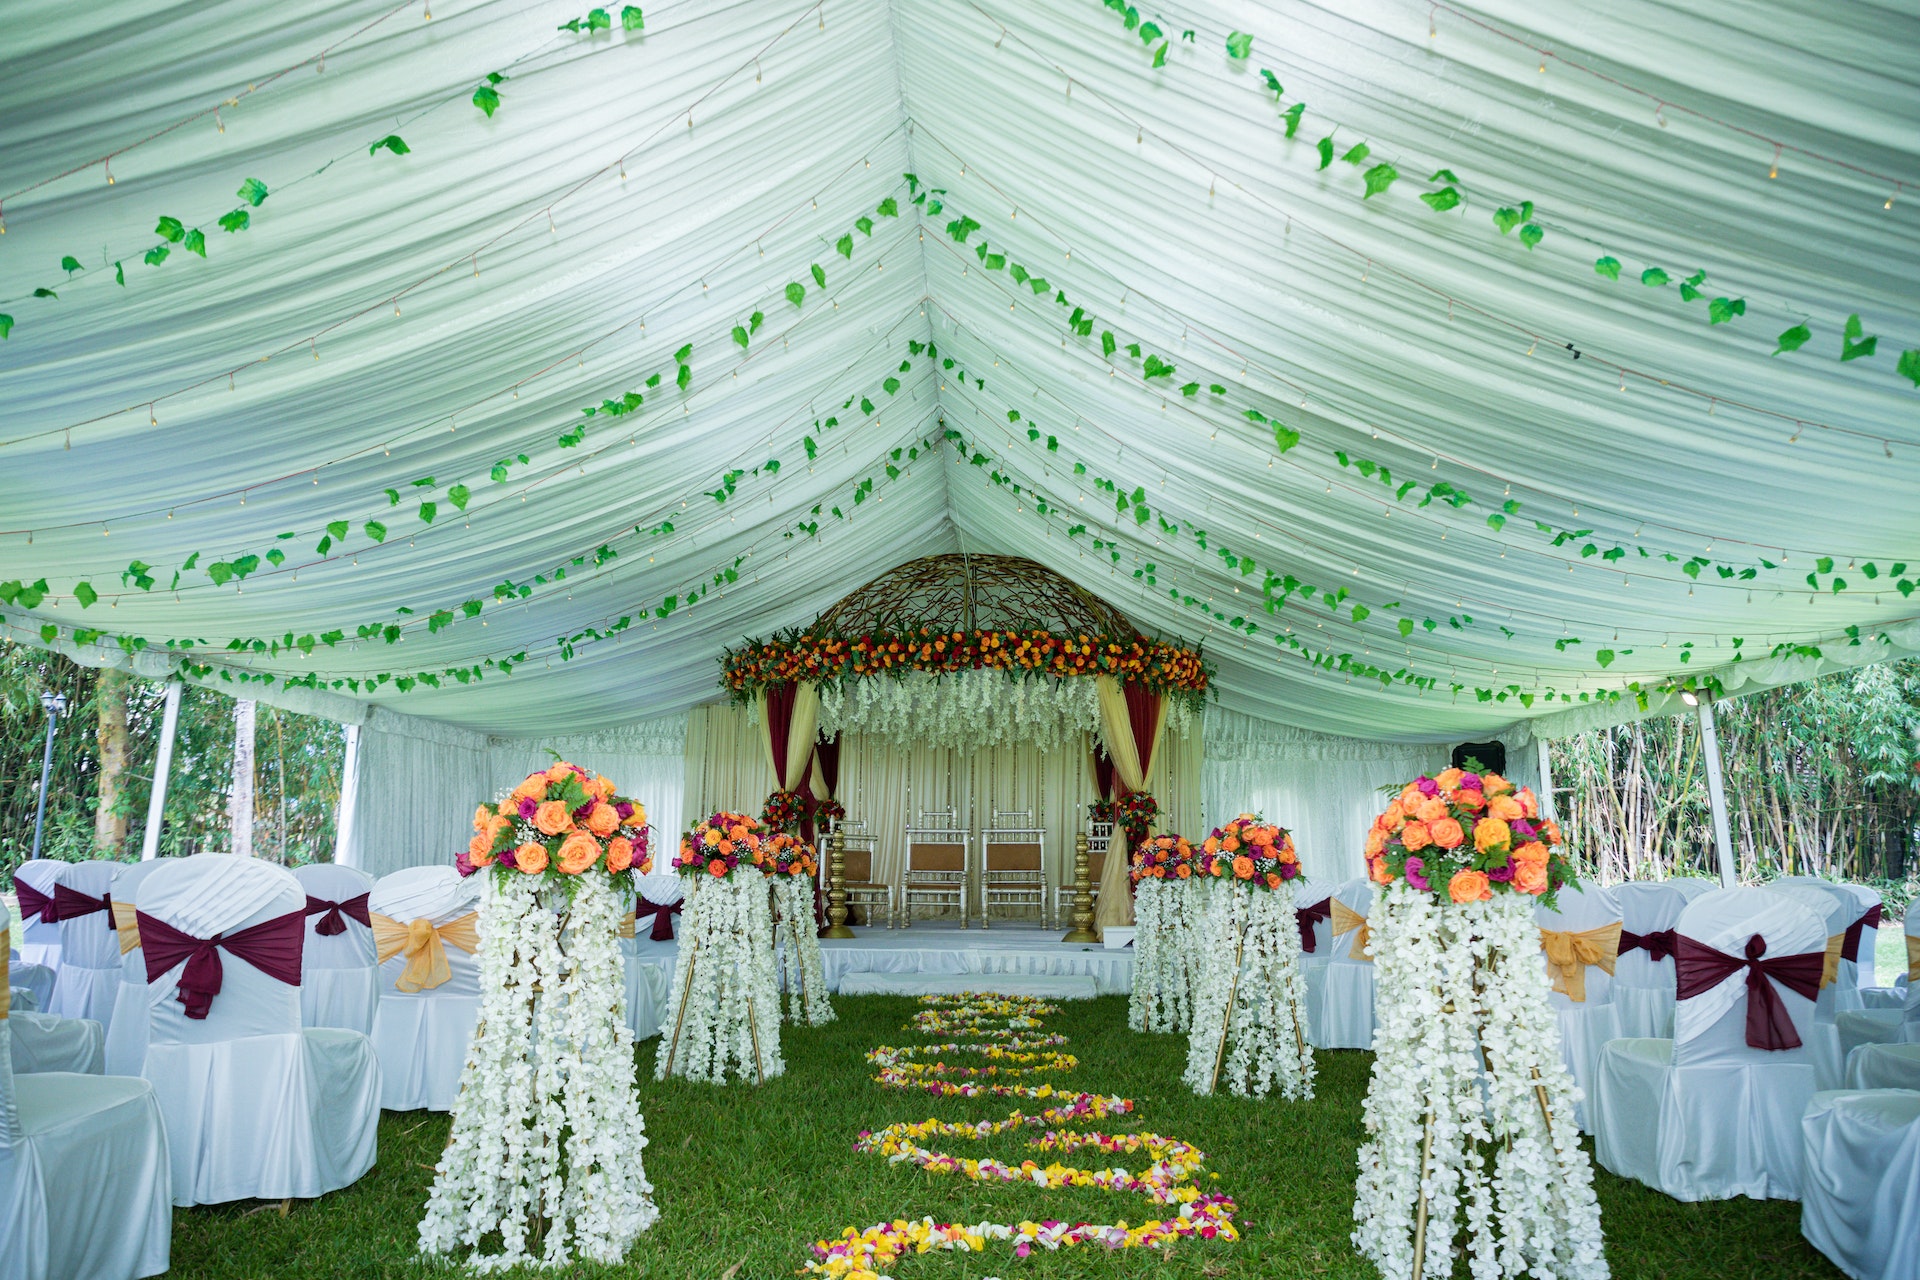 A wedding setup inside a tent | Source: Pexels